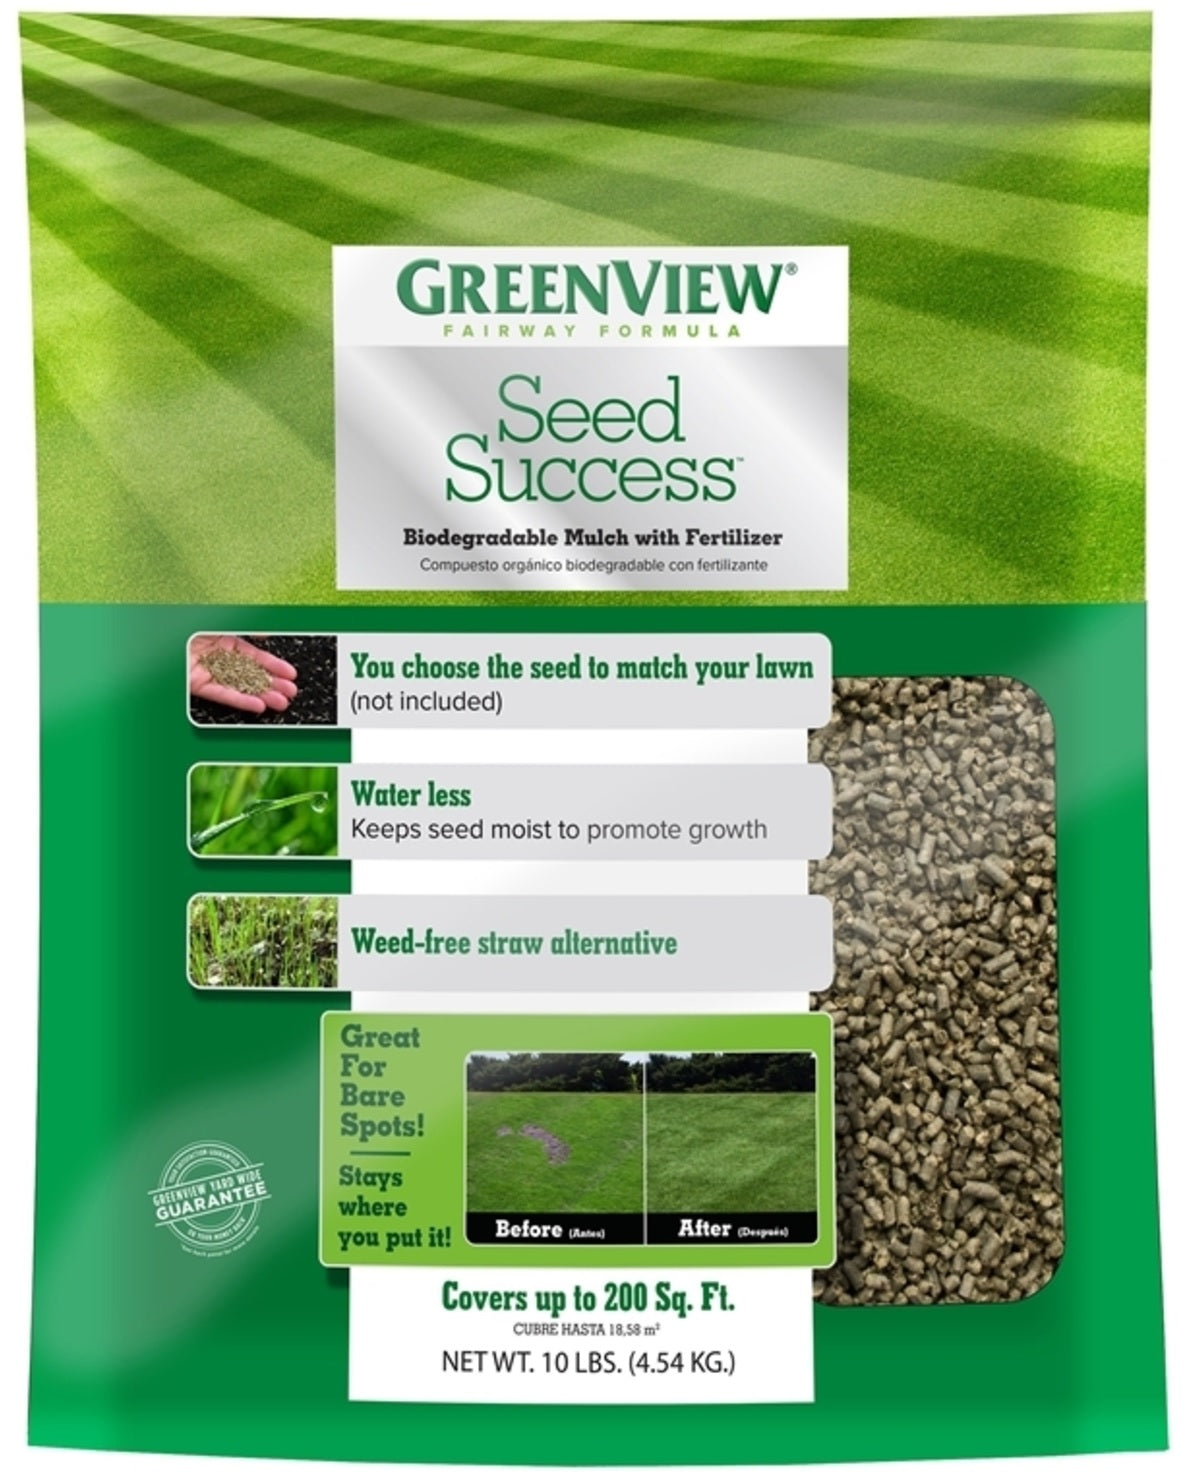 GreenView 23-29824 Fairway Formula Seed Success, 10 Lbs